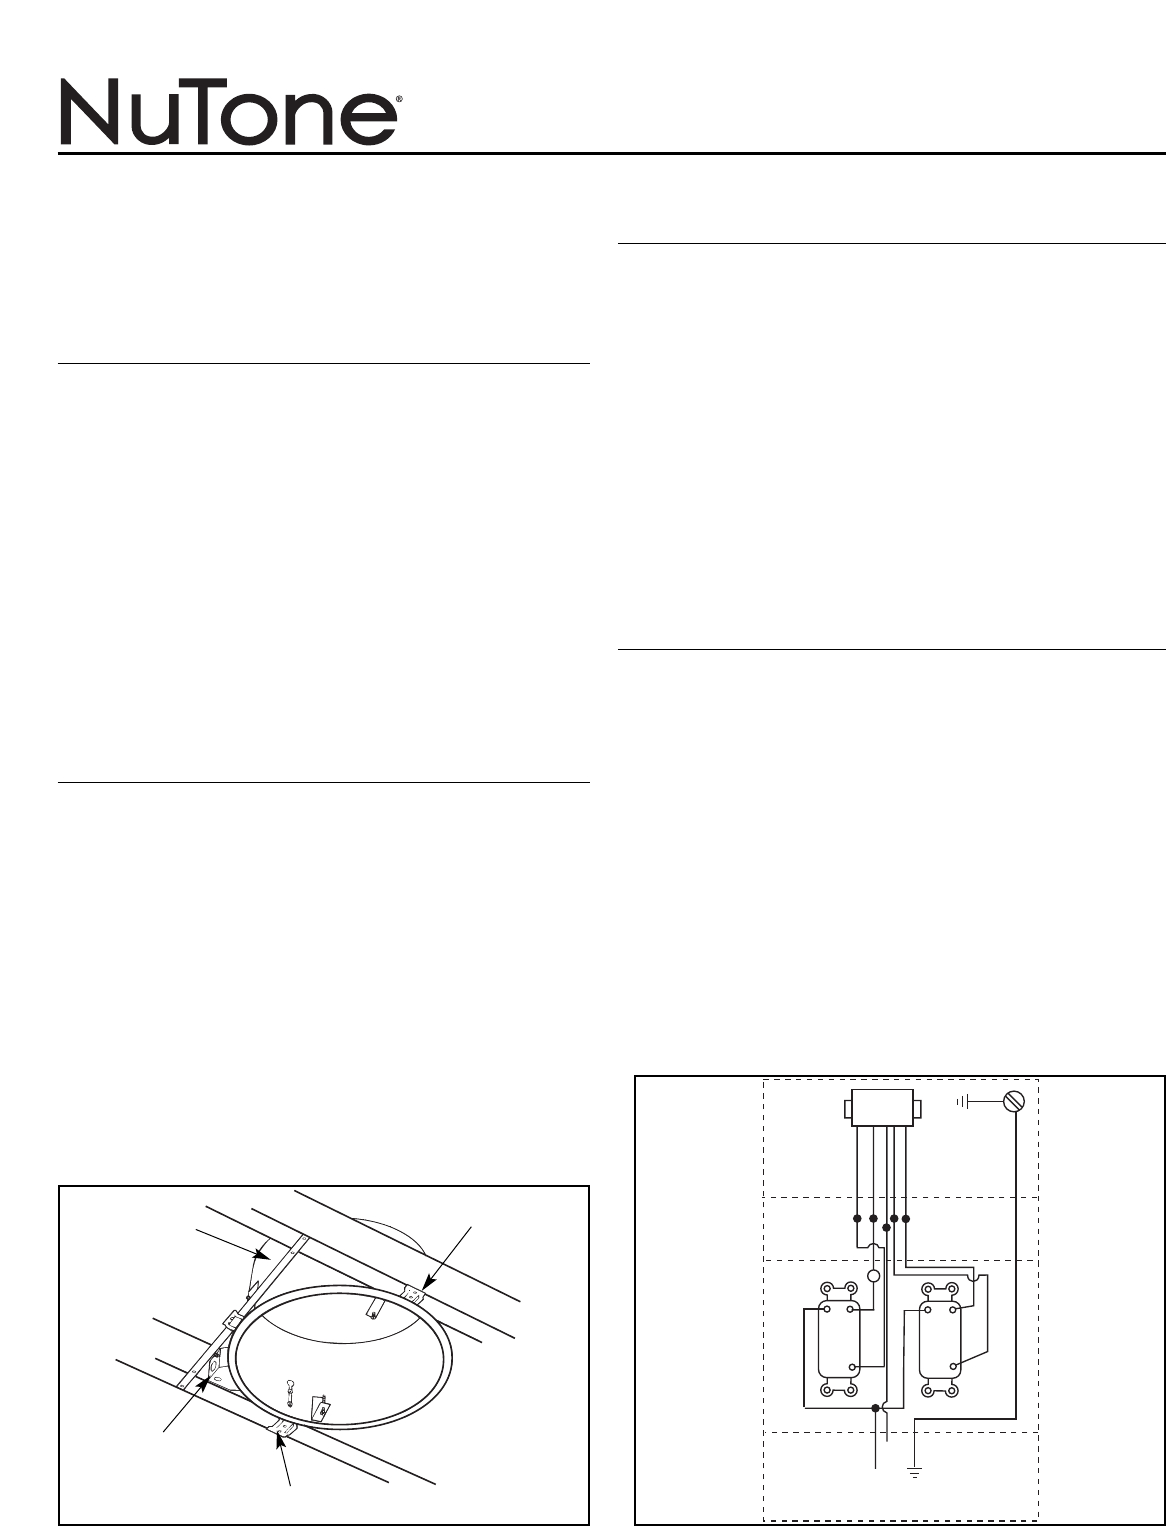 Nutone Ventilation Hood 9093 User Guide Manualsonline inside dimensions 1166 X 1526